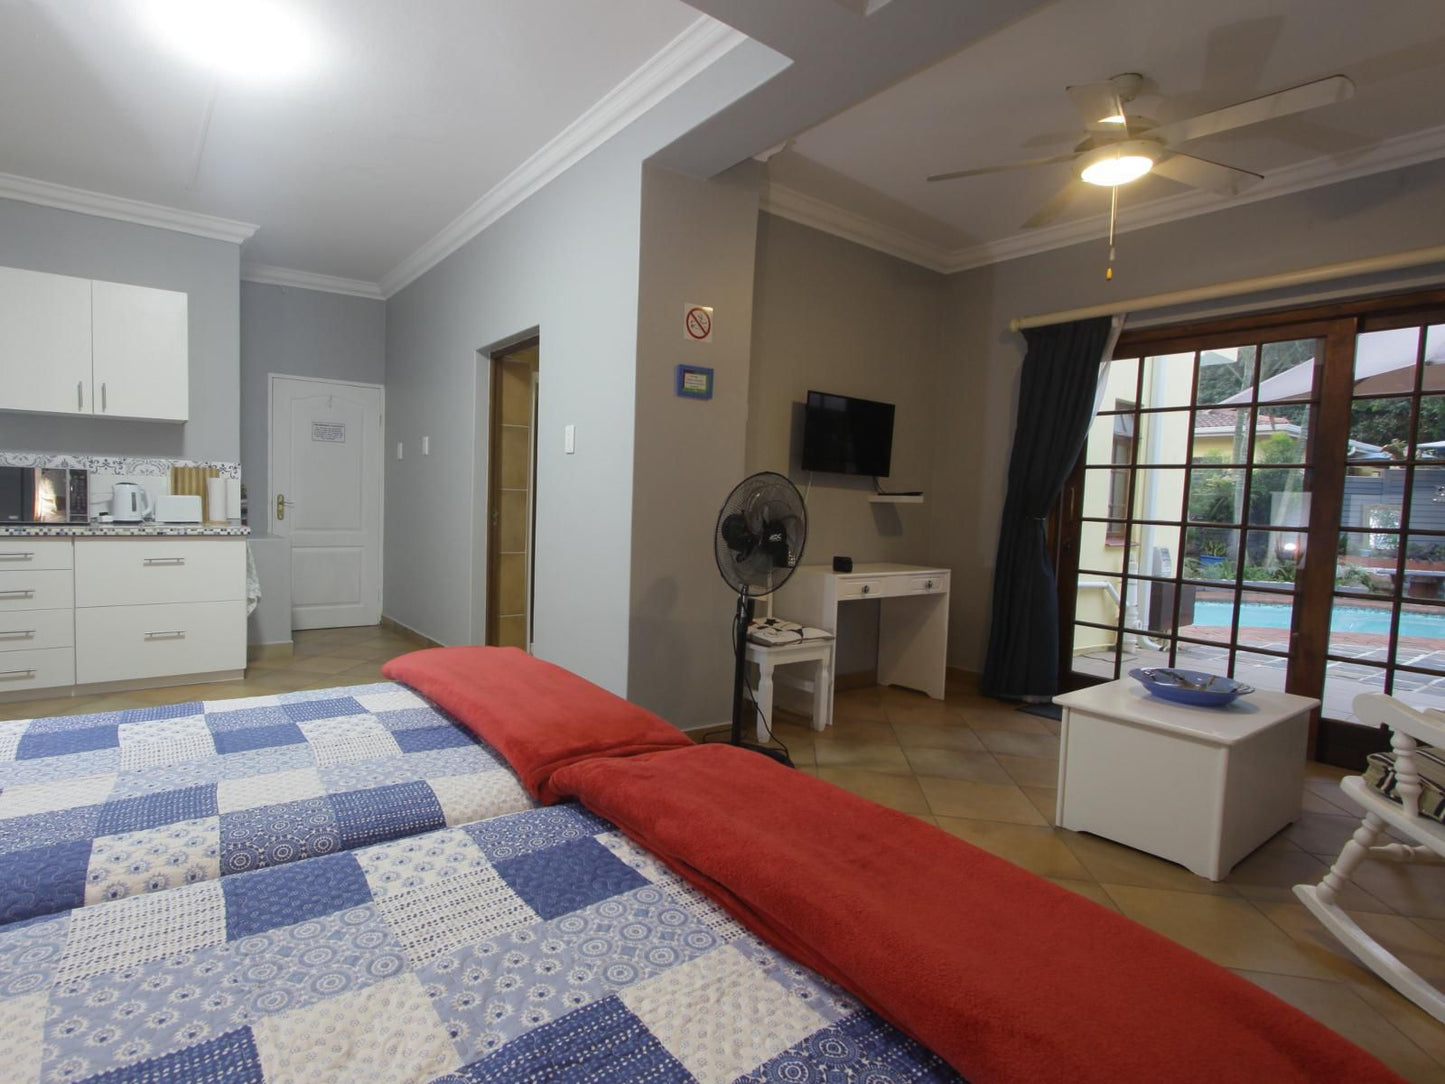 Tuksumduin Guesthouse Ballito Kwazulu Natal South Africa Bedroom